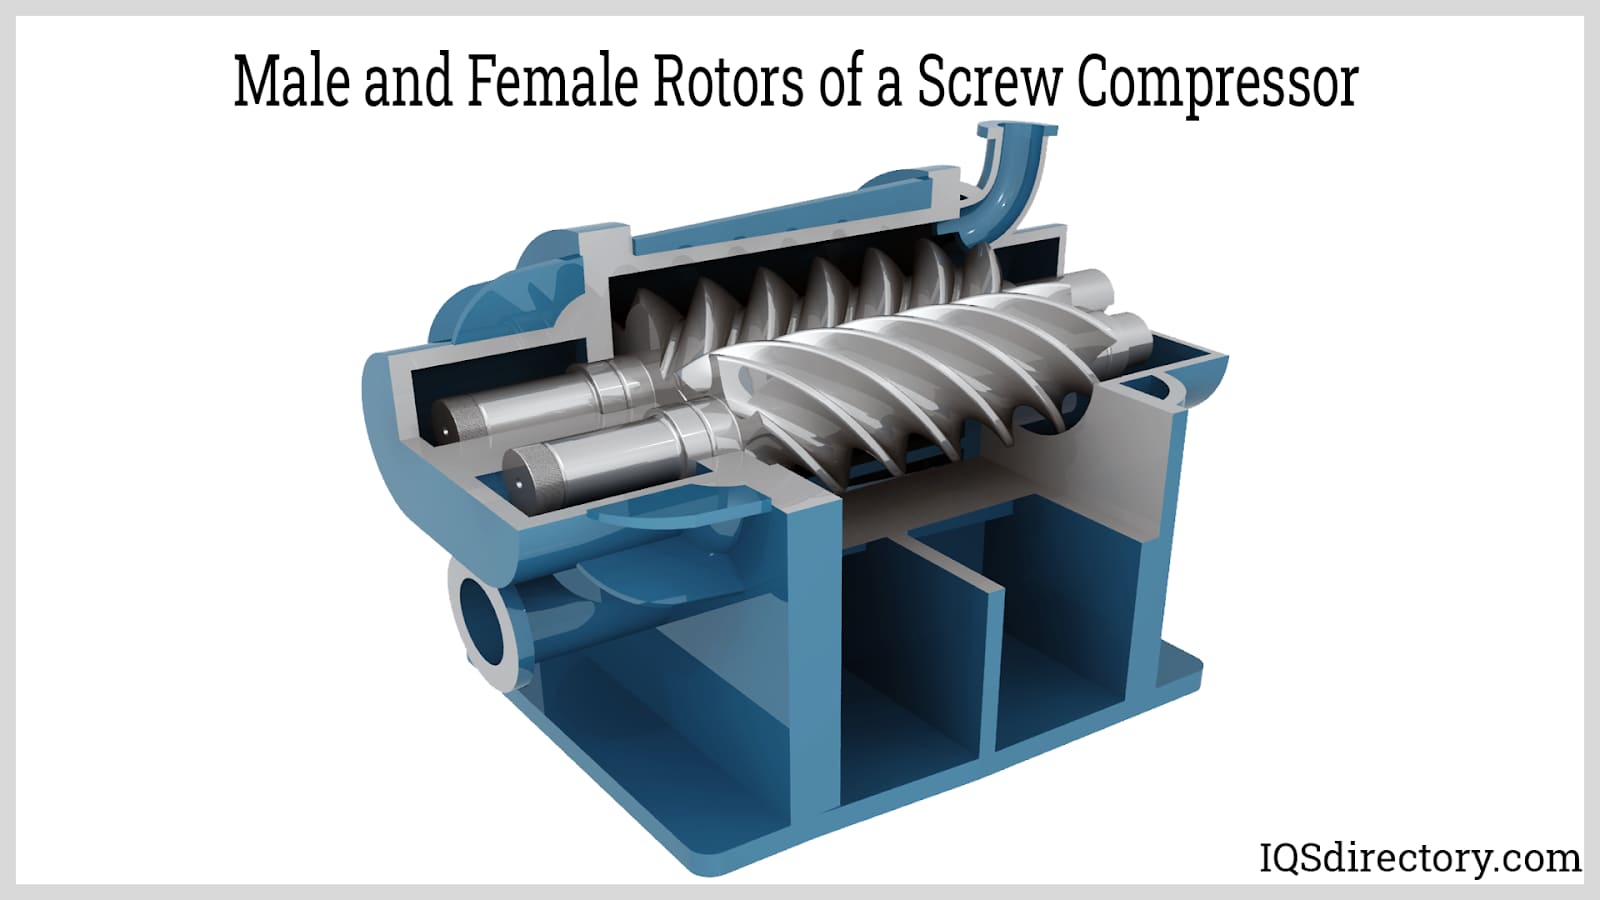 Male and Female Rotors of a Screw Compressor